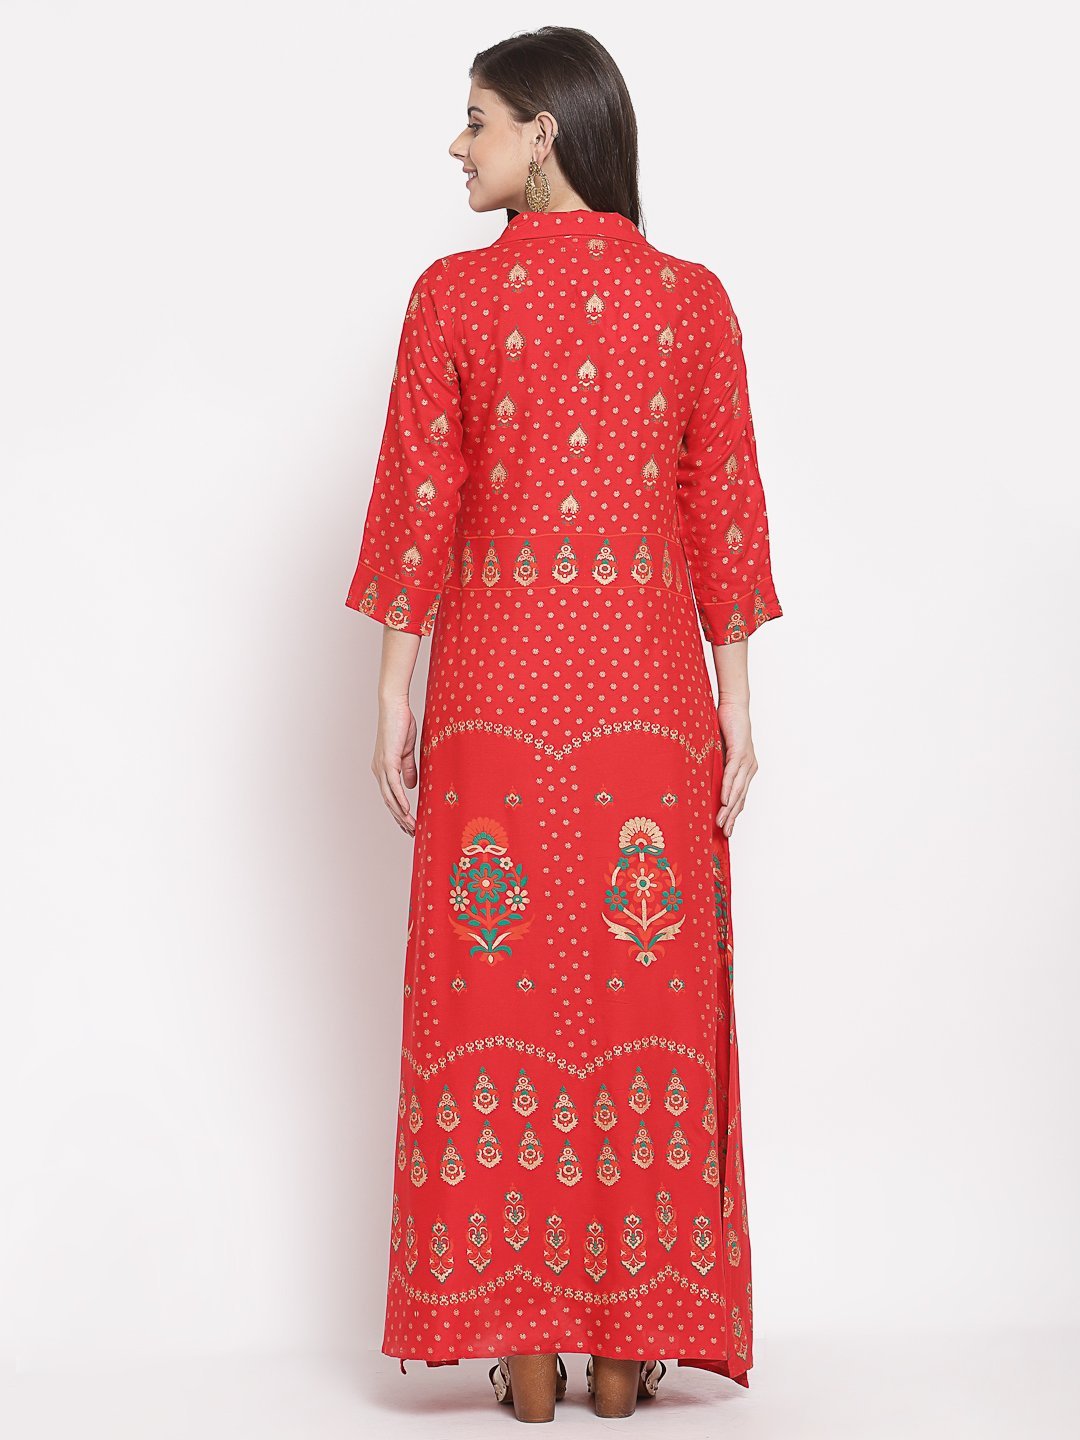 Women's Red Cotton Printed 3/4 Sleeve Collar Neck Casual Anarkali Kurta - Myshka